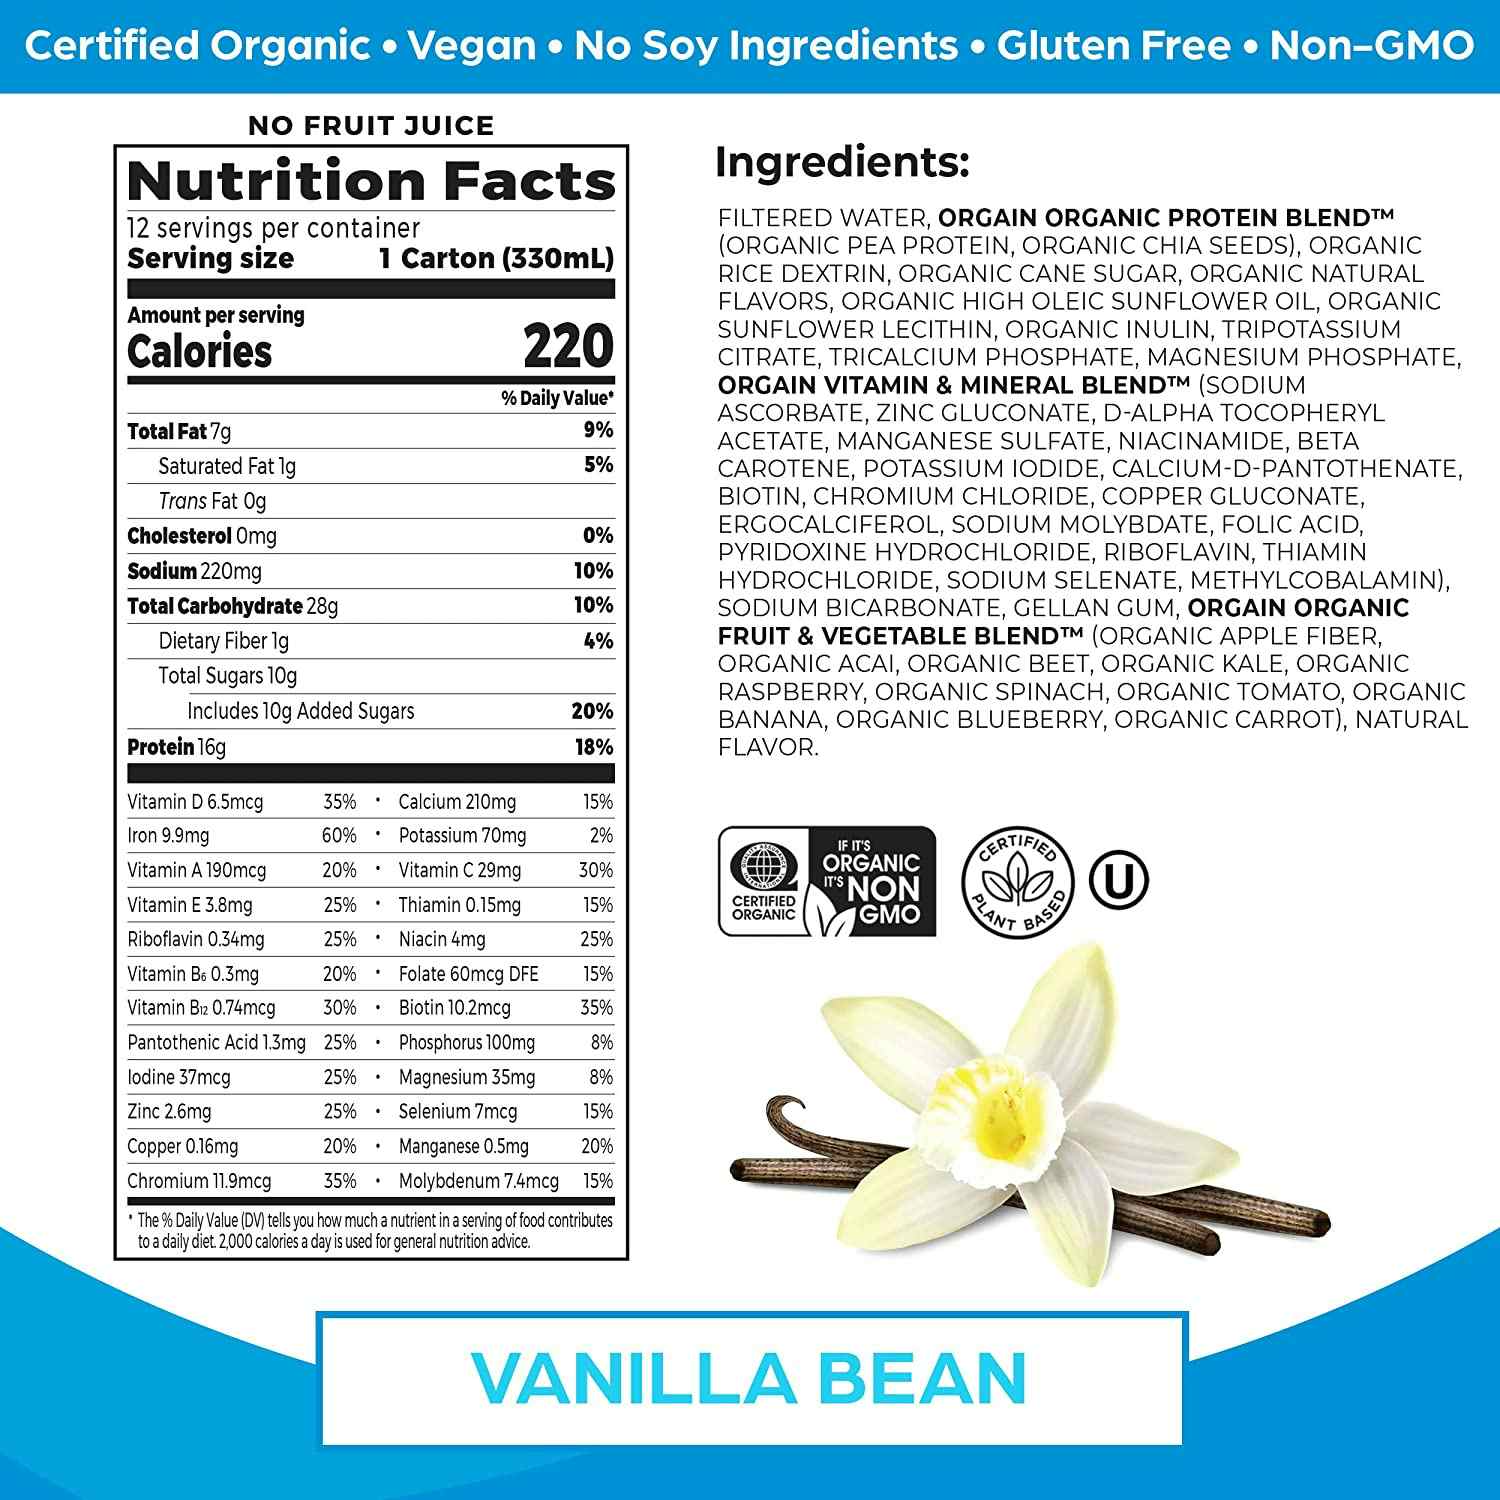 Orgain Organic Nutrition Vegan All-In-One Protein Shake, Vanilla Bean, 11 oz., 851770006743, Pack of 4